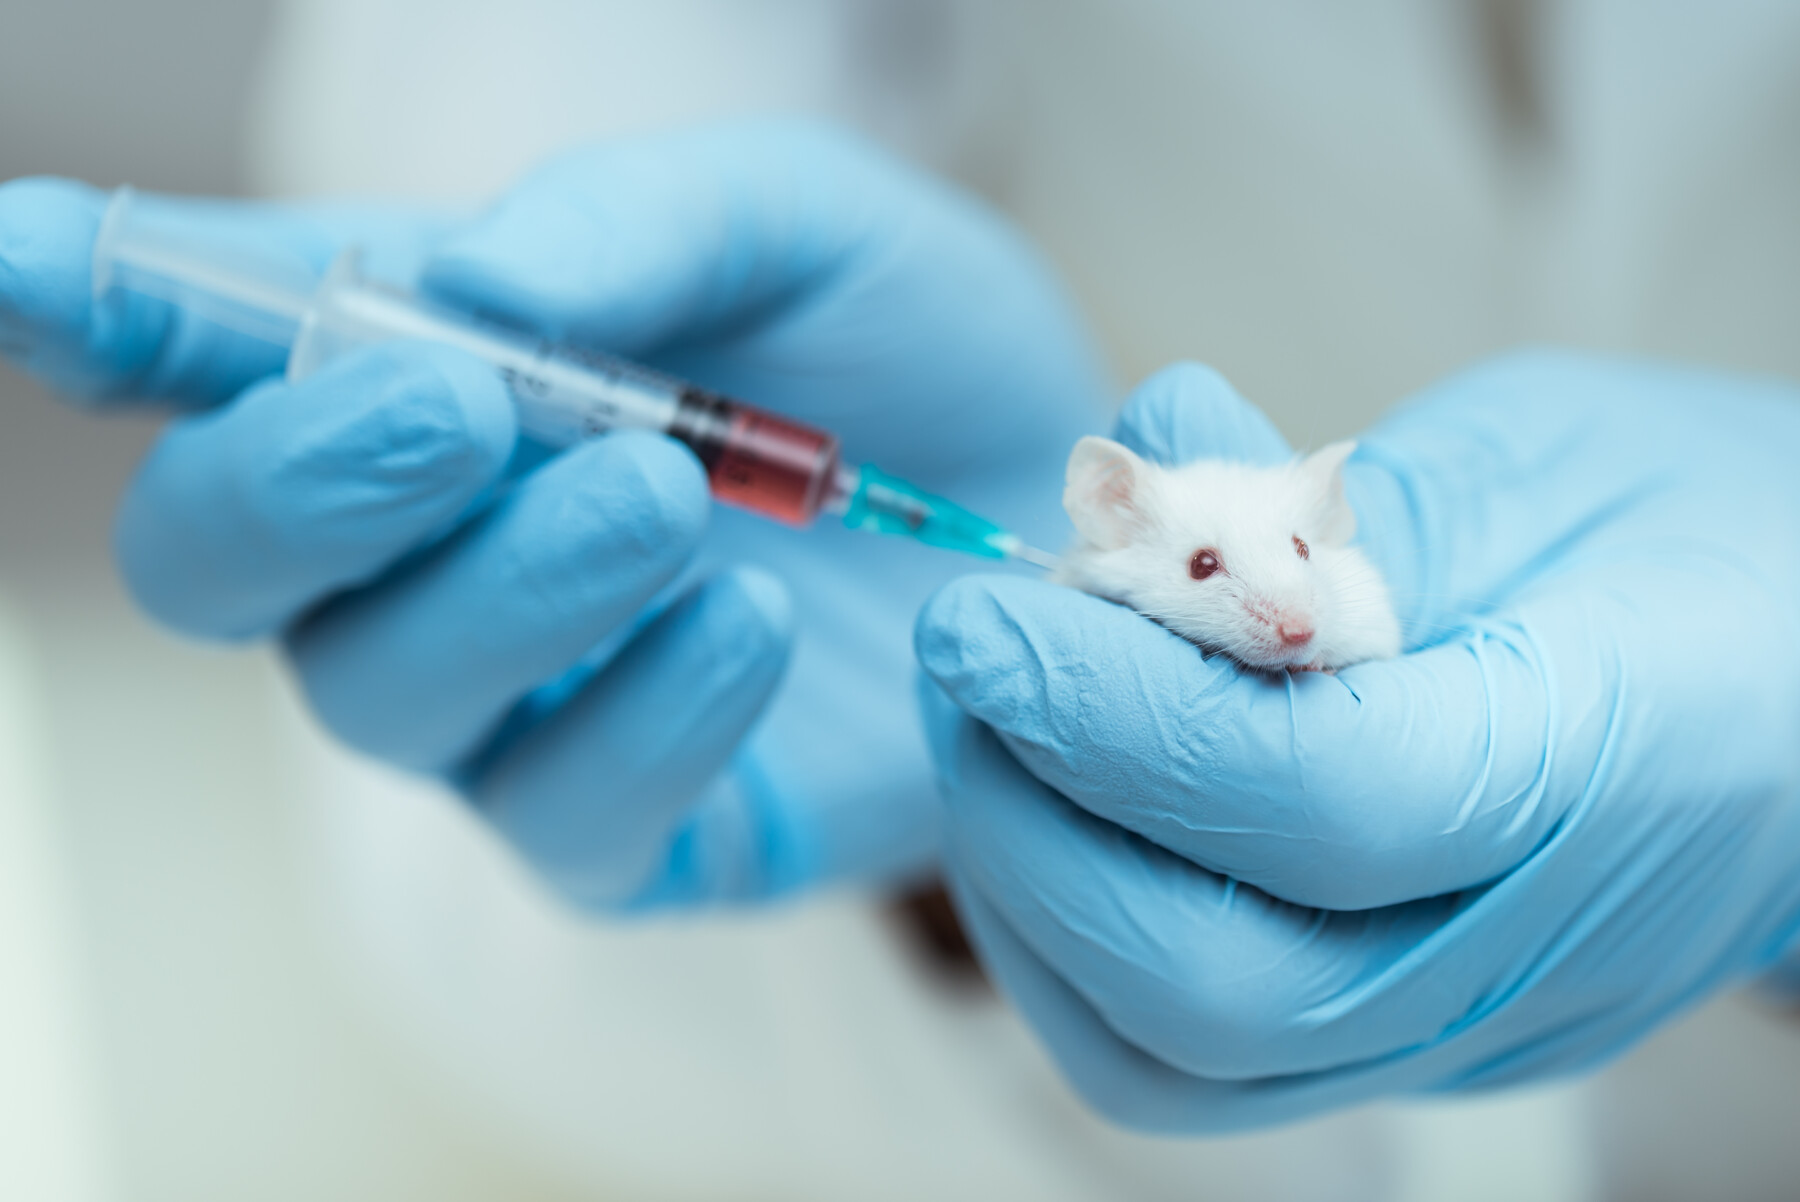 animal testing issue essay